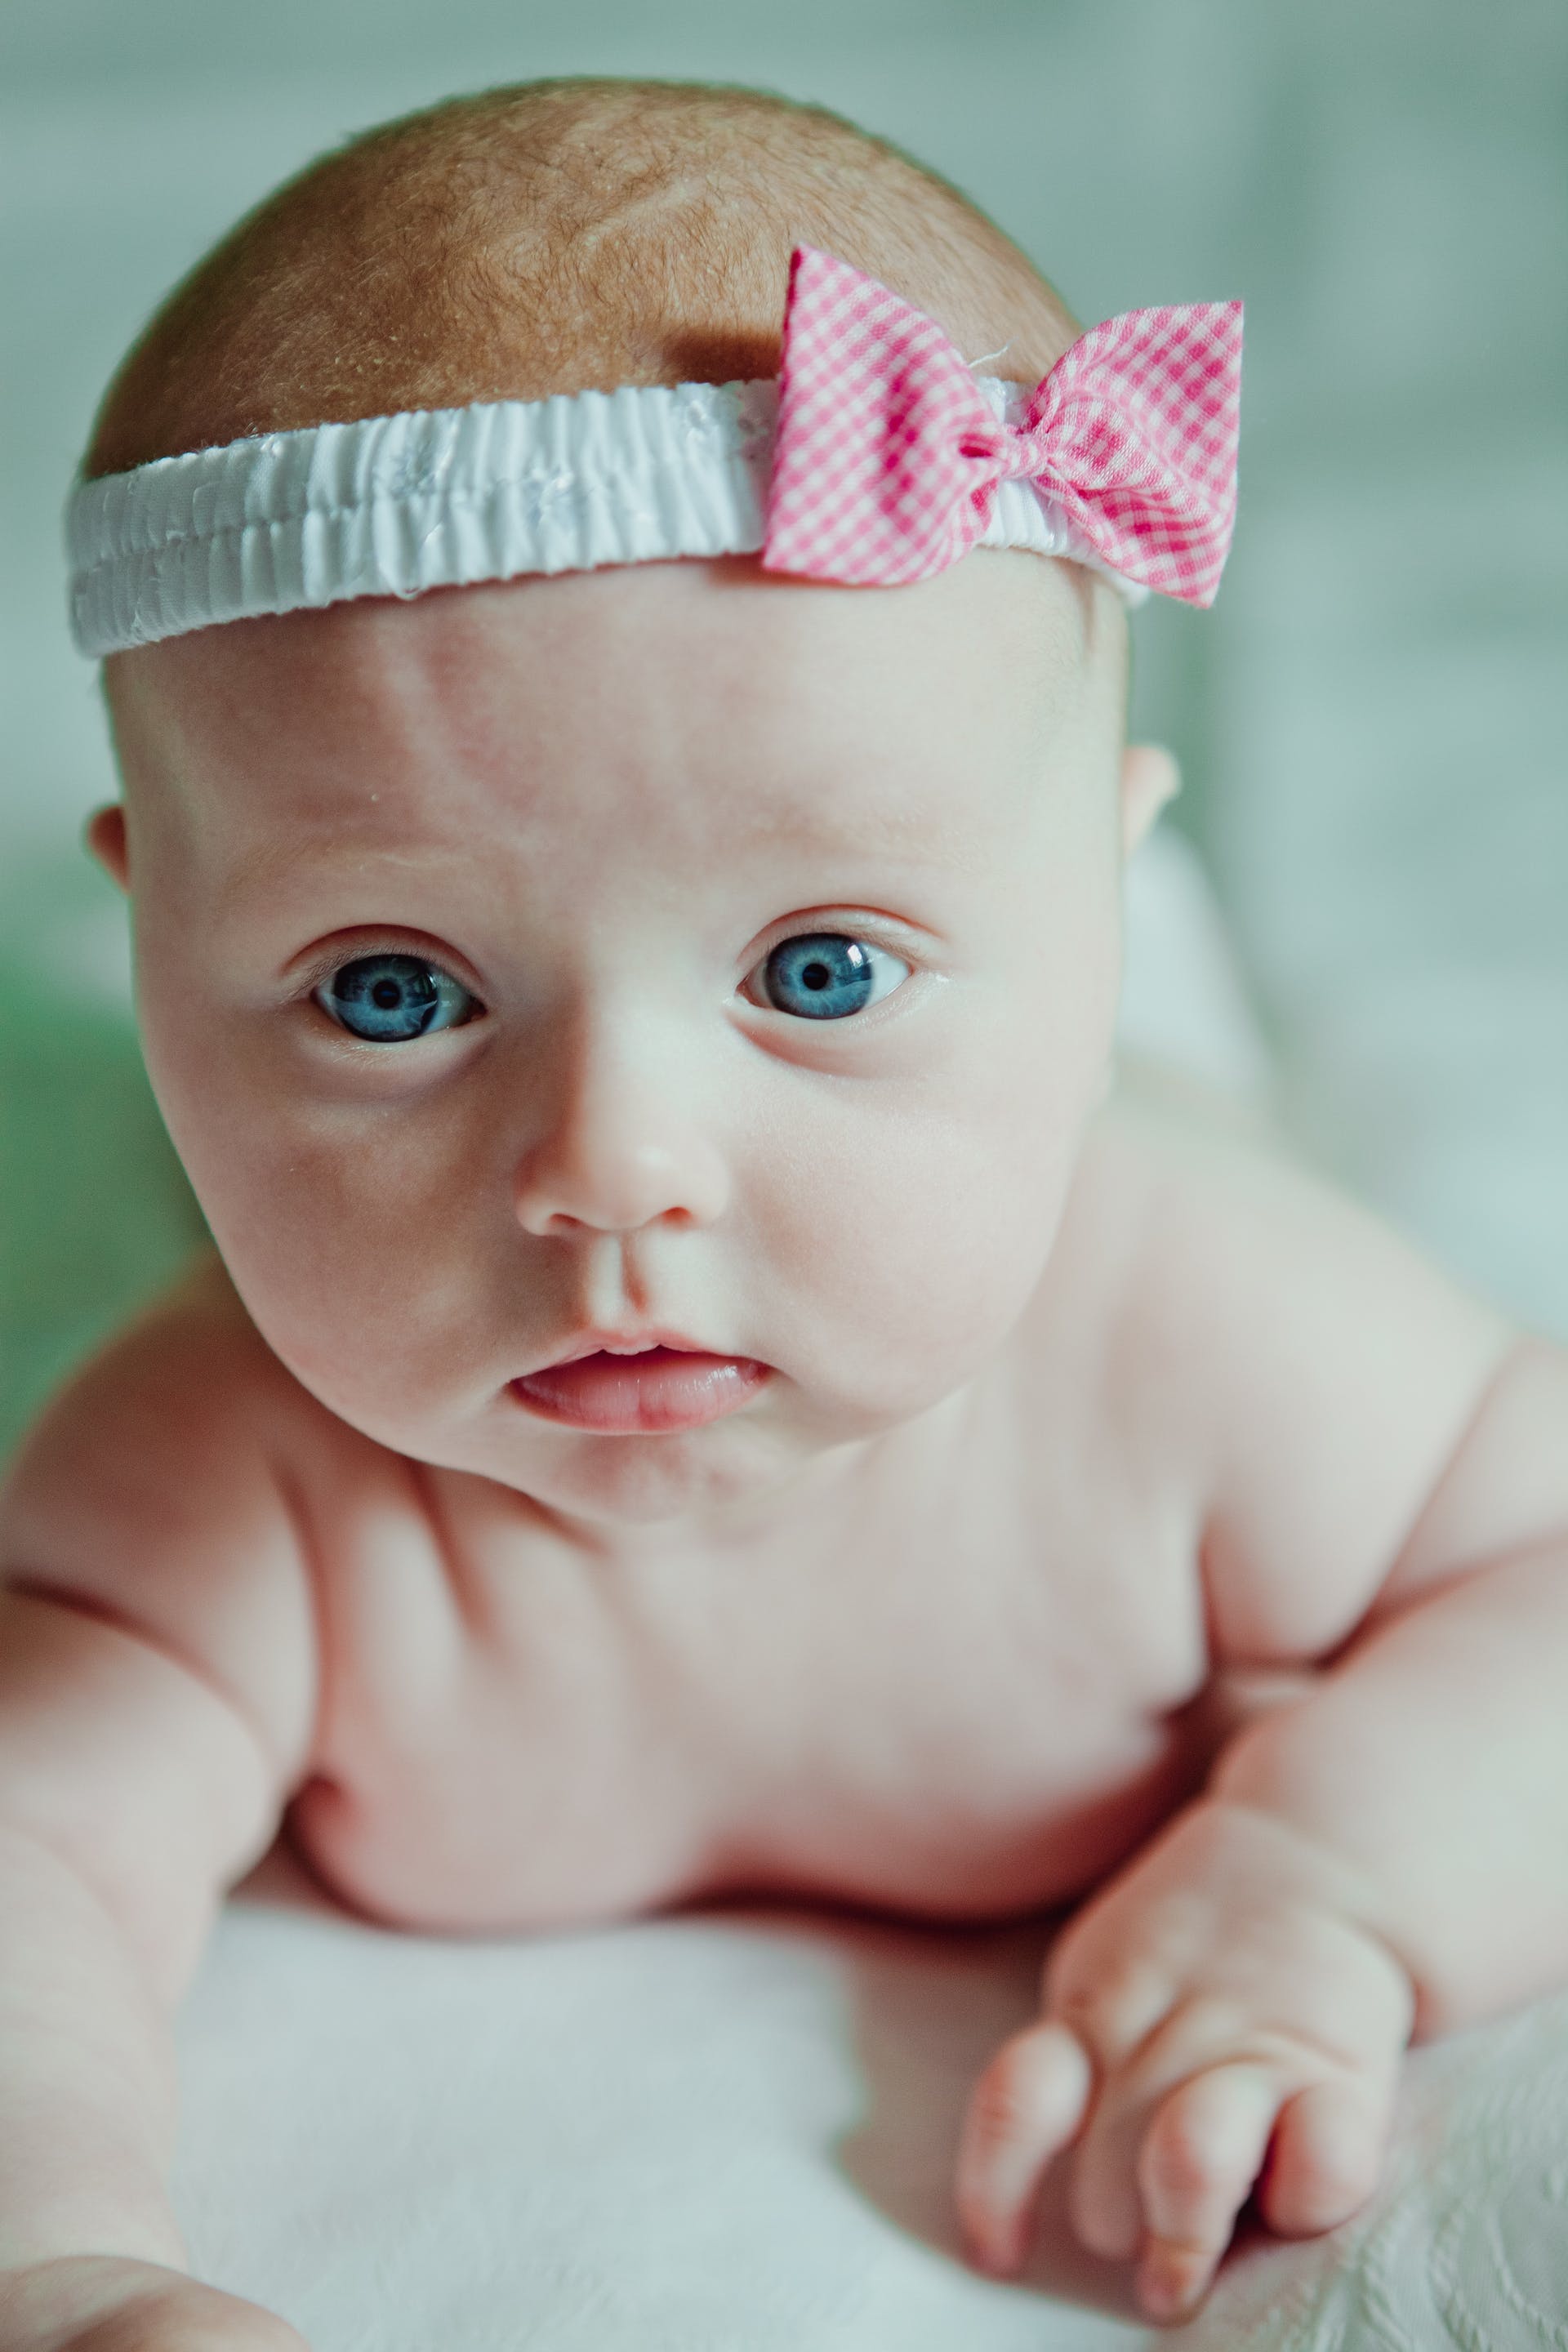 A close-up shot of a newborn with a headband | Source: Pexels